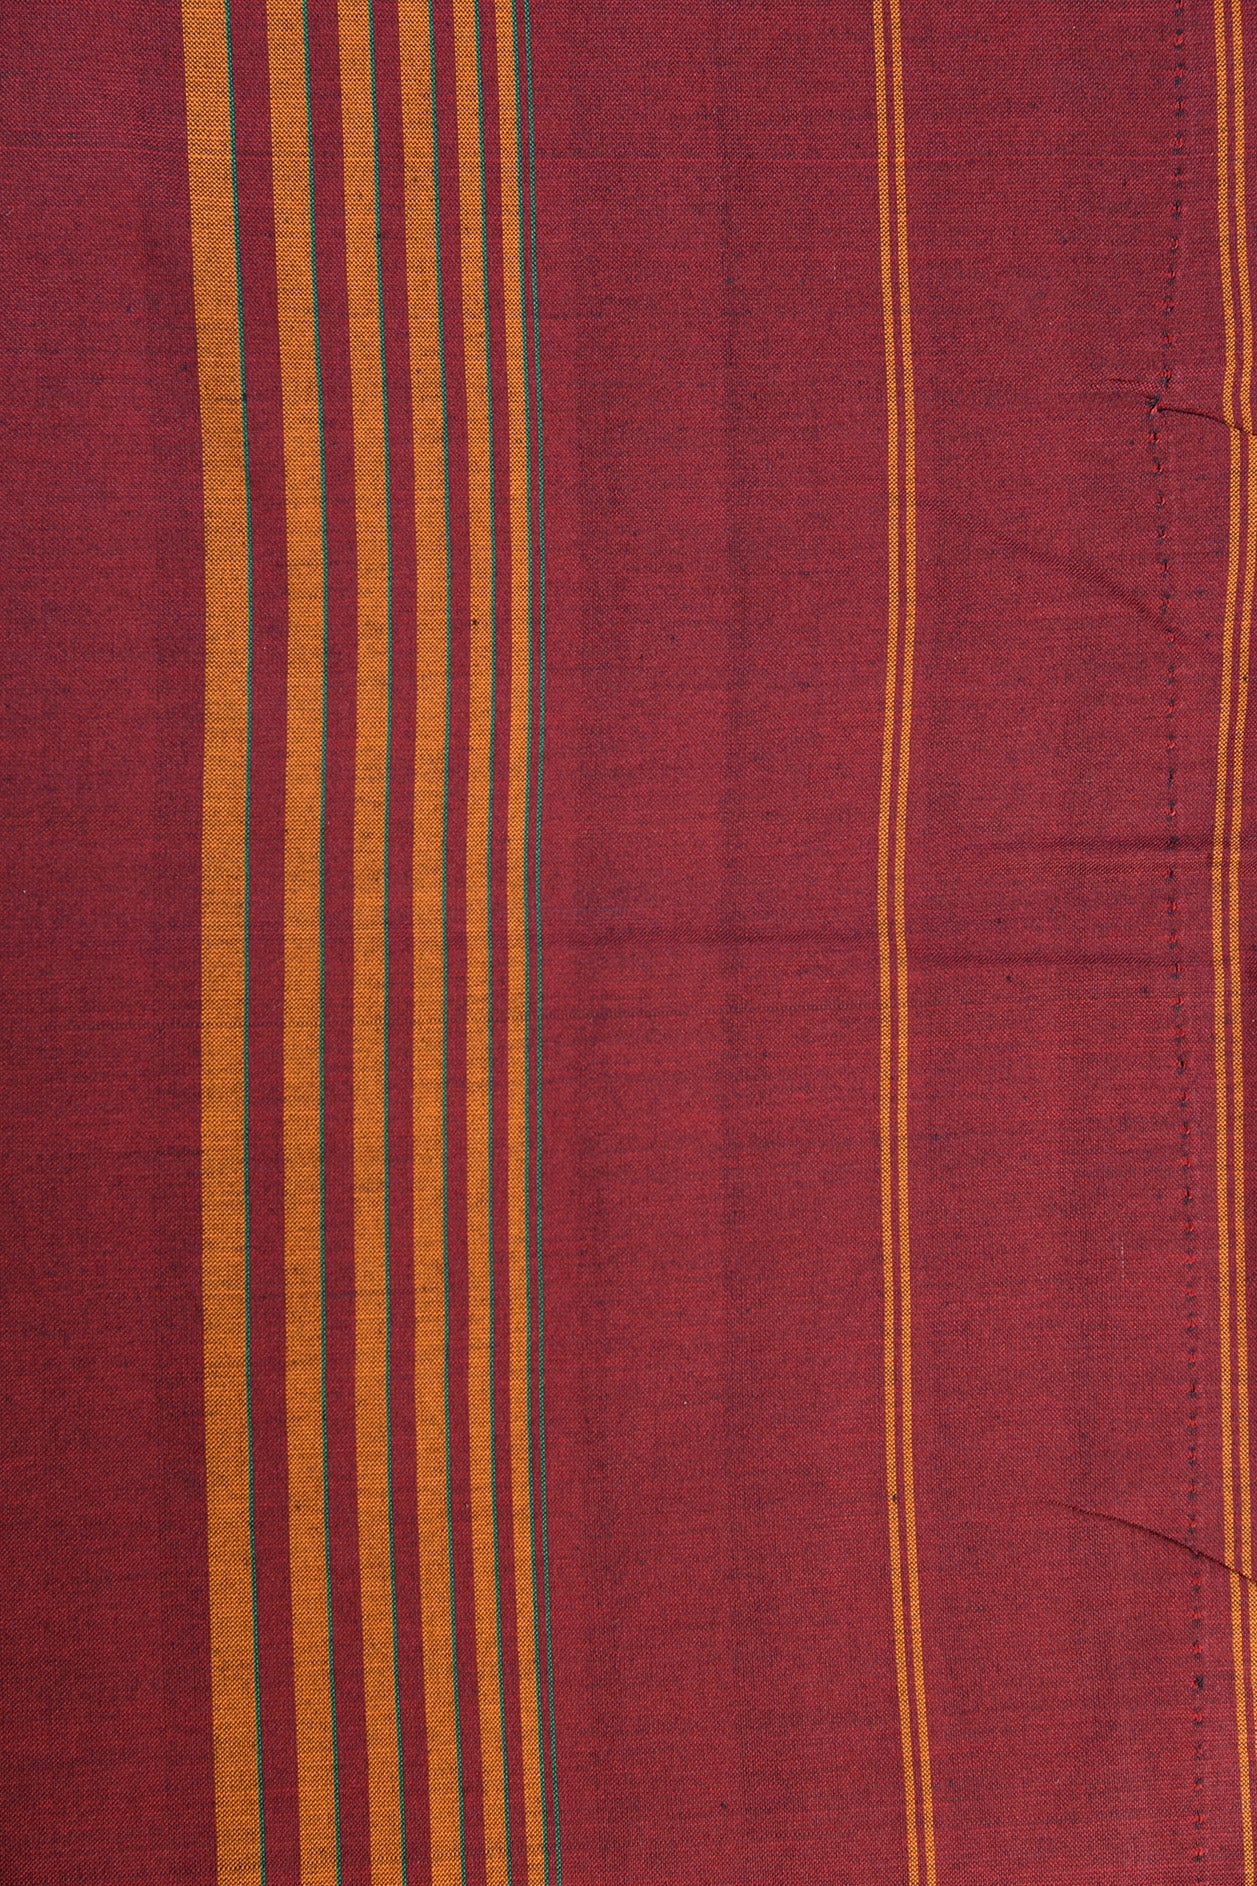 Kasuti Embroidery Work Forest Green Dharwad Cotton Saree